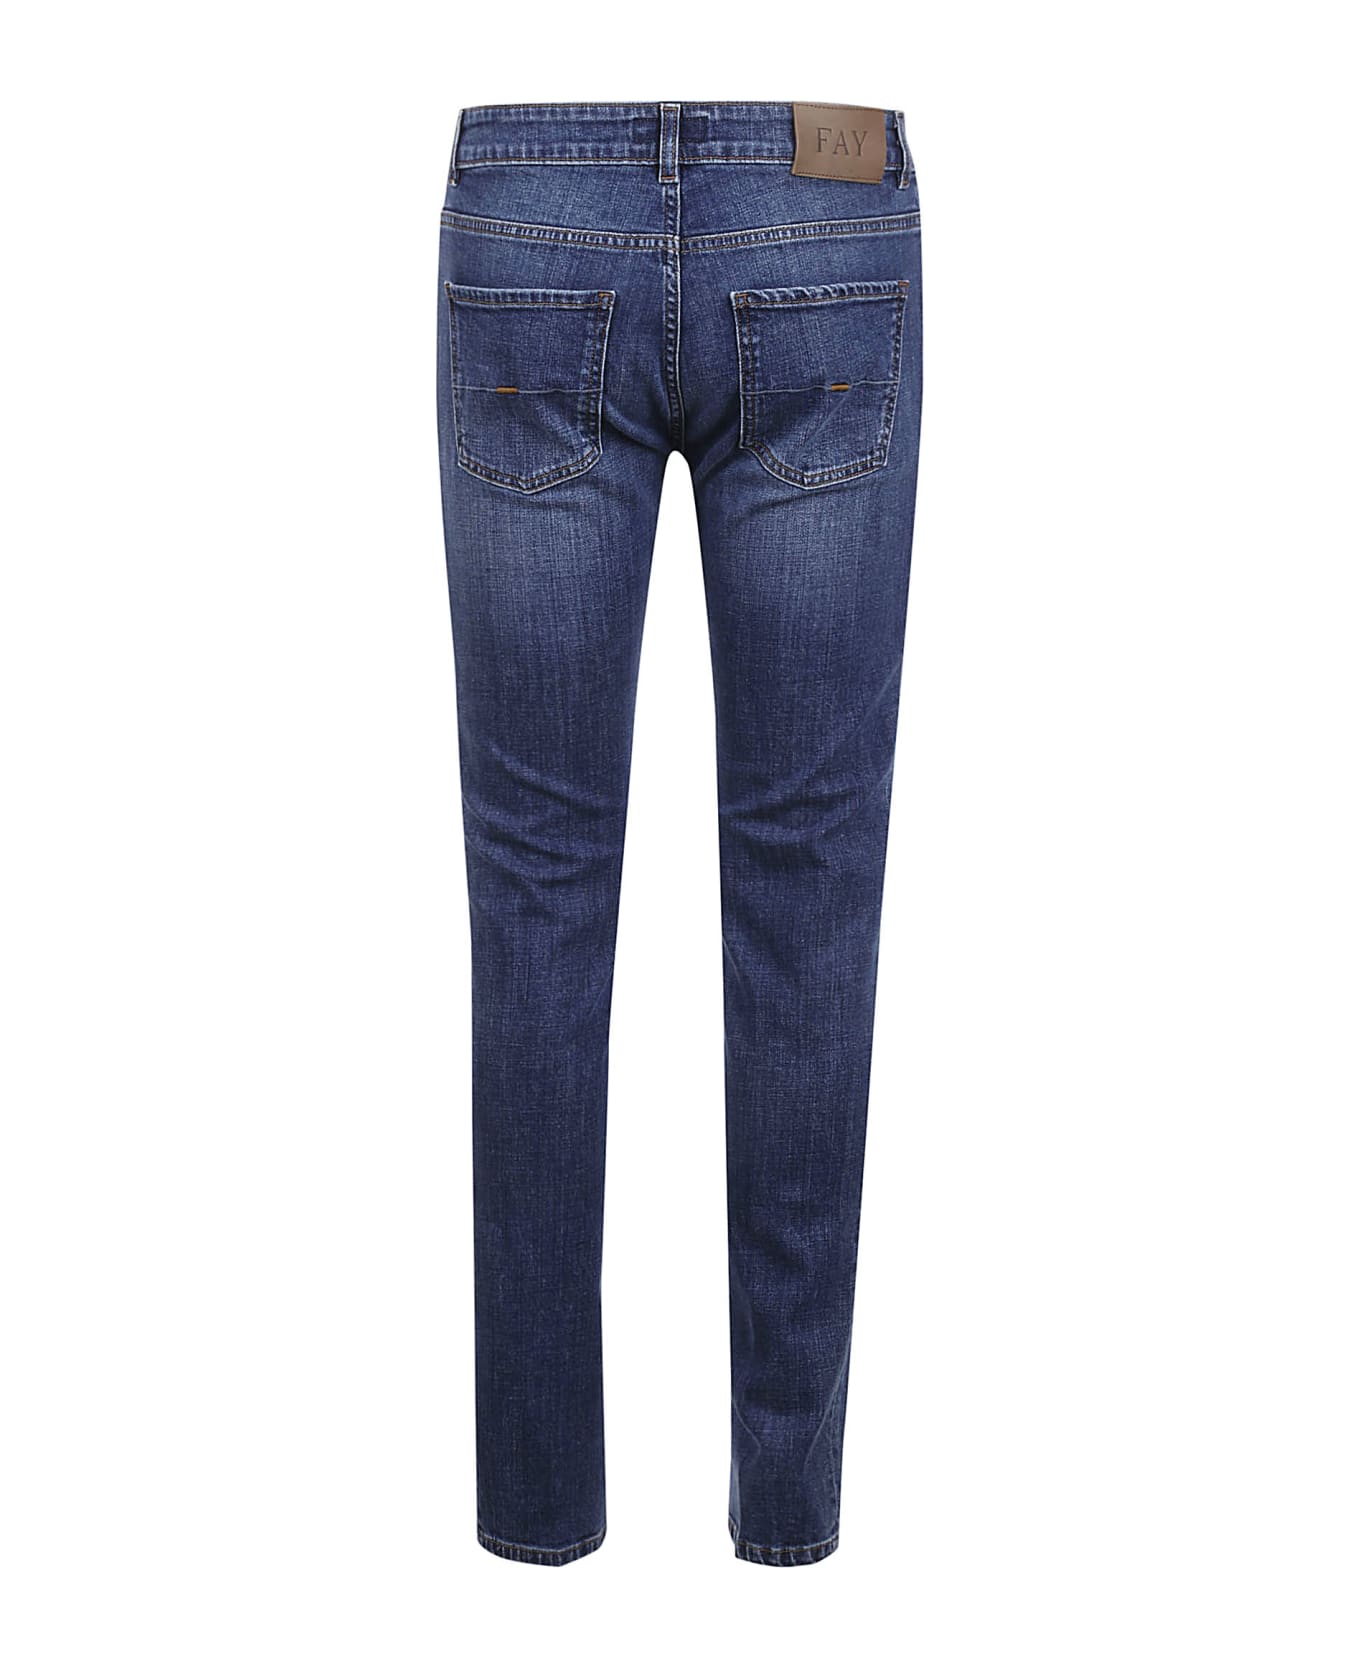 Fay Classic 5 Pockets Jeans - Blue